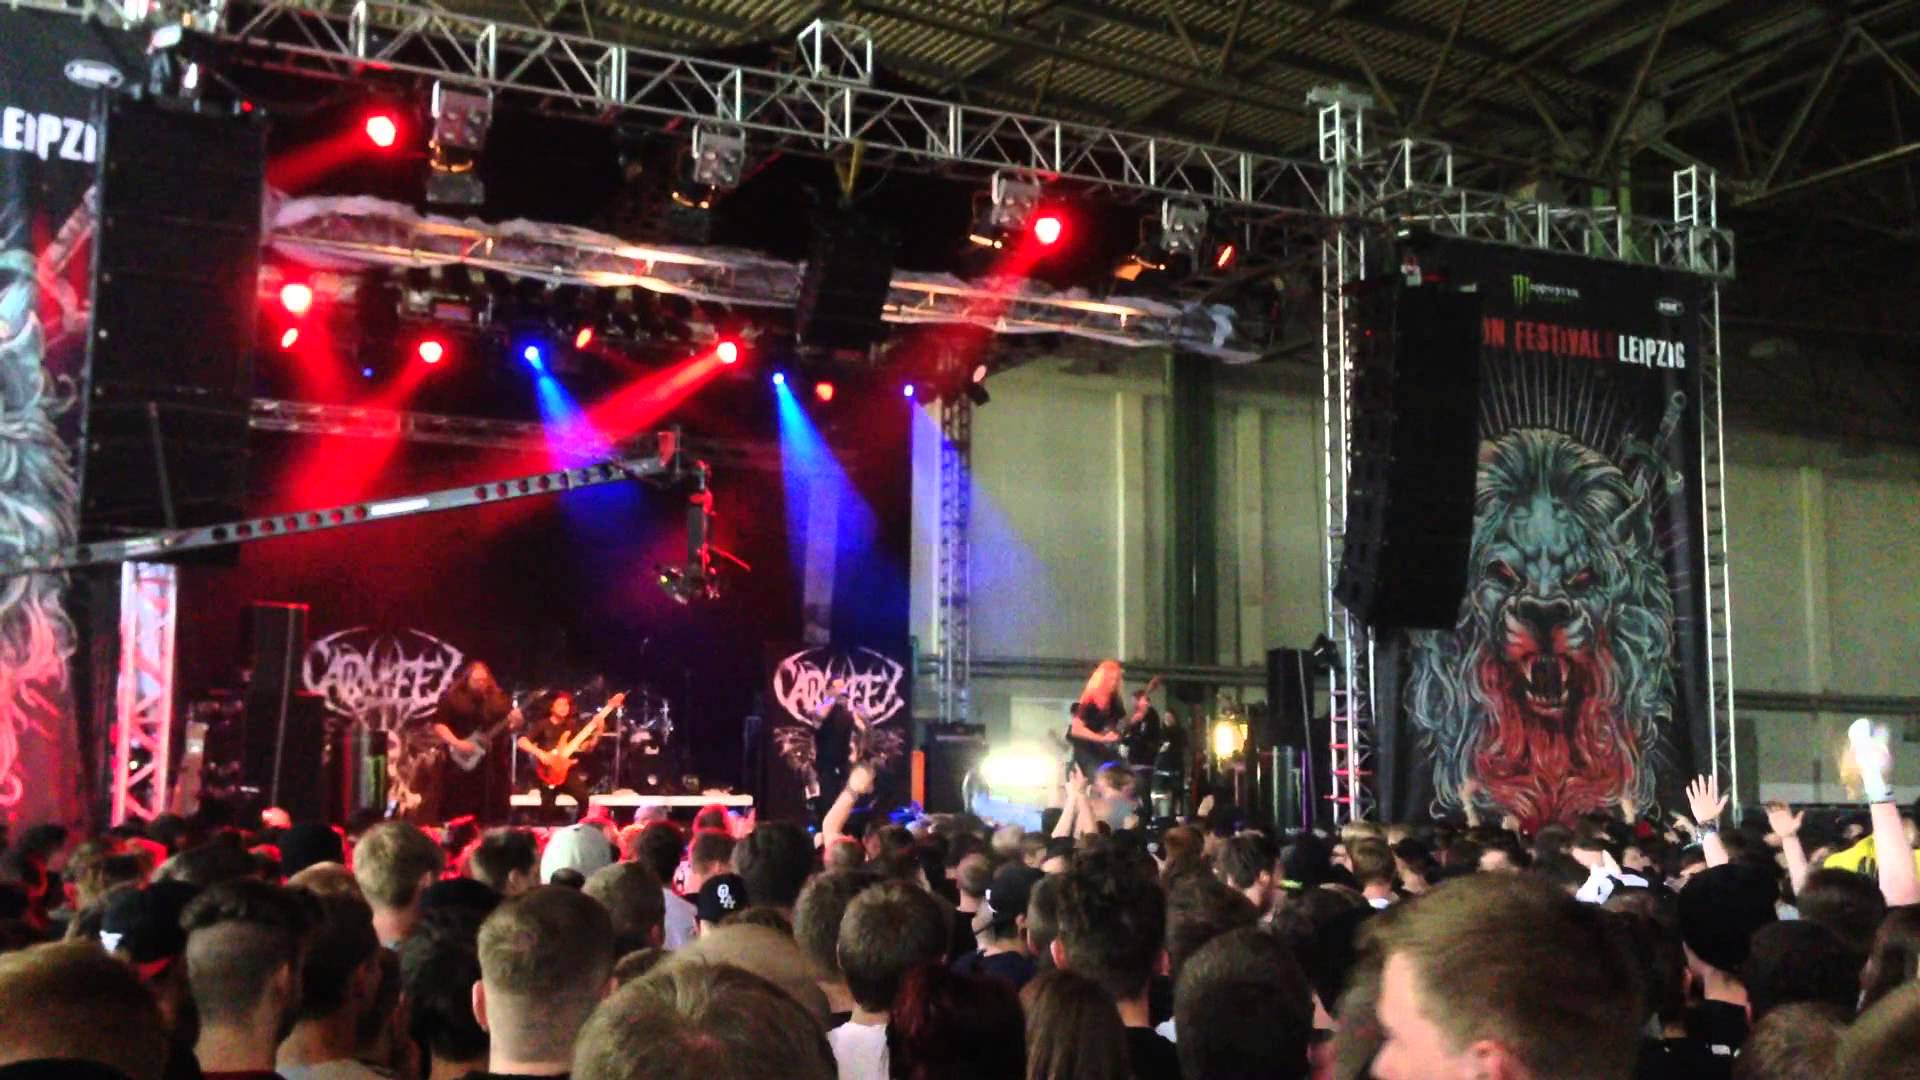 Carnifex - Dark Days Live @ Impericon Festival Leipzig 2015